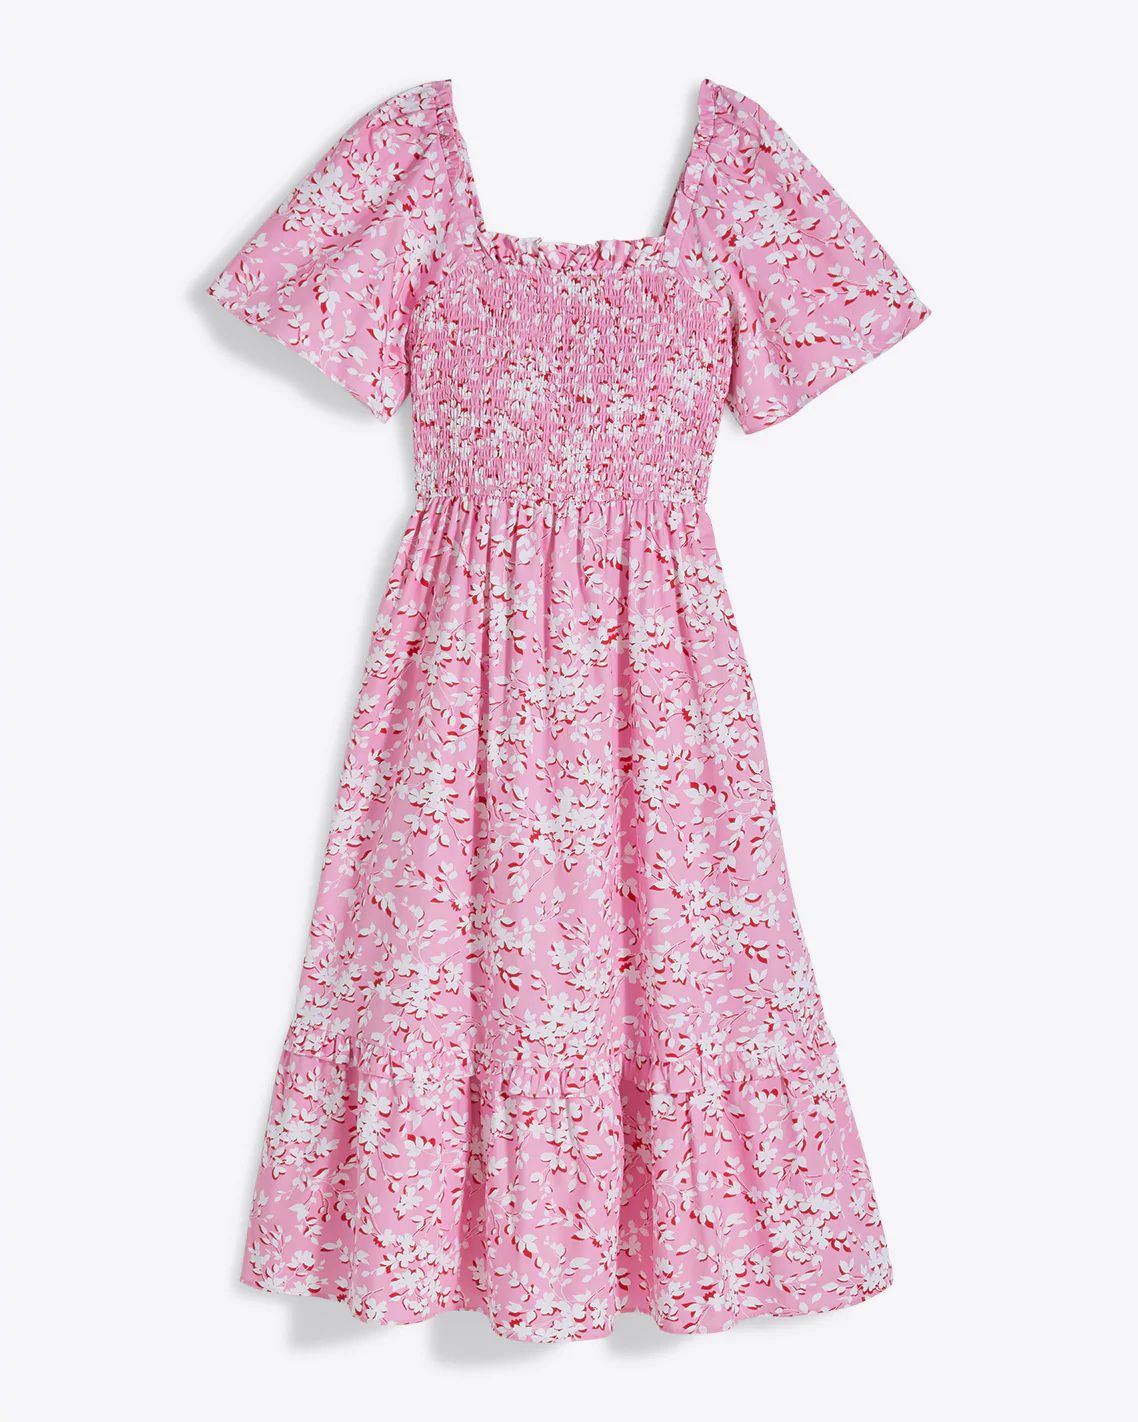 Deana Smocked Dress in Pink Shadow Floral | Draper James (US)